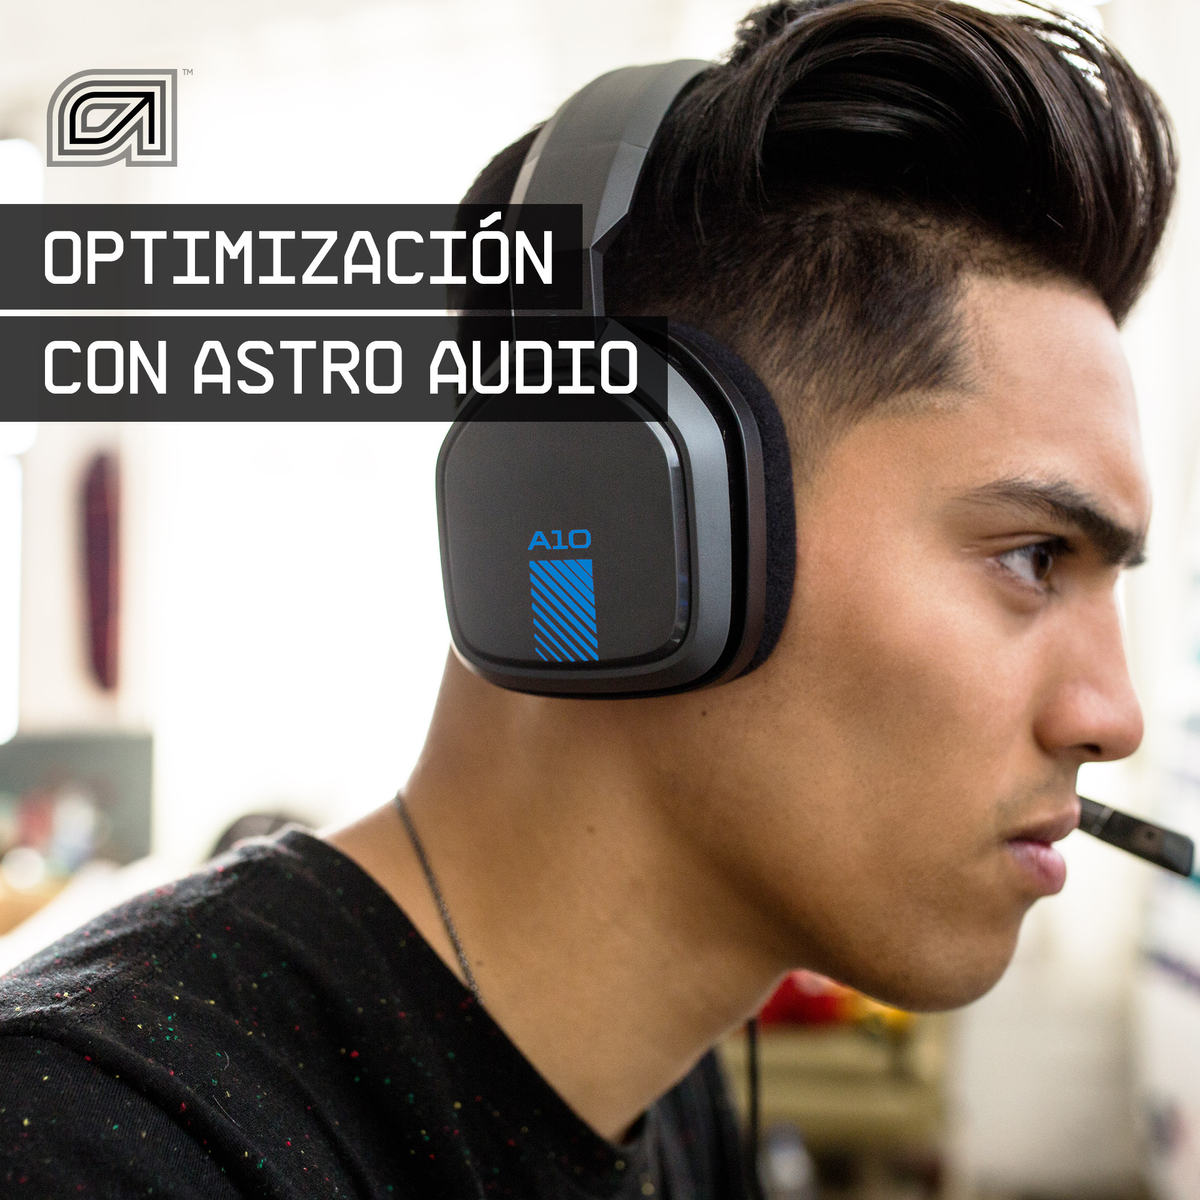 ASTRO GAMING 939-001531 A10 PS4 HEADSET GREY/BLUE, Gaming Grau/Blau Headset Over-ear